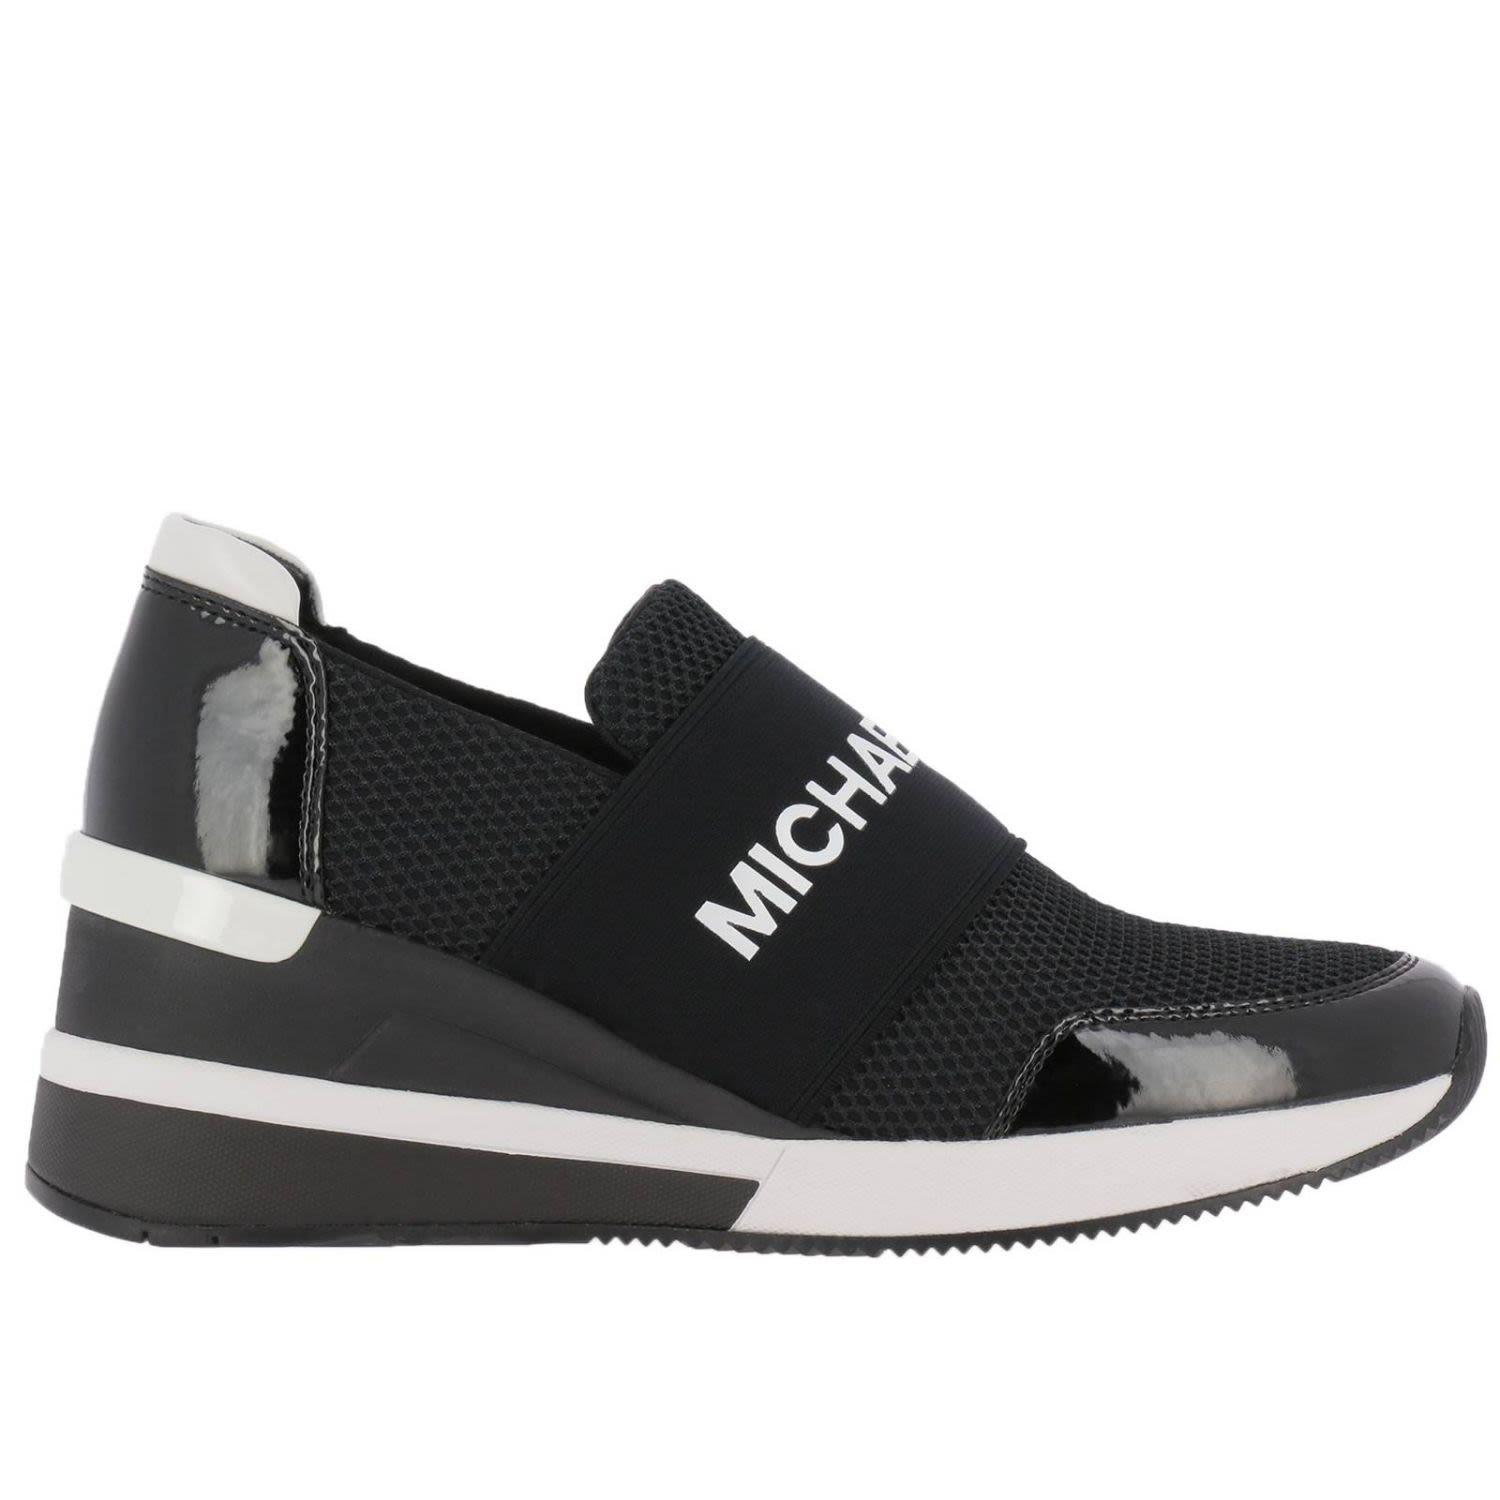 michael kors women's black sneakers